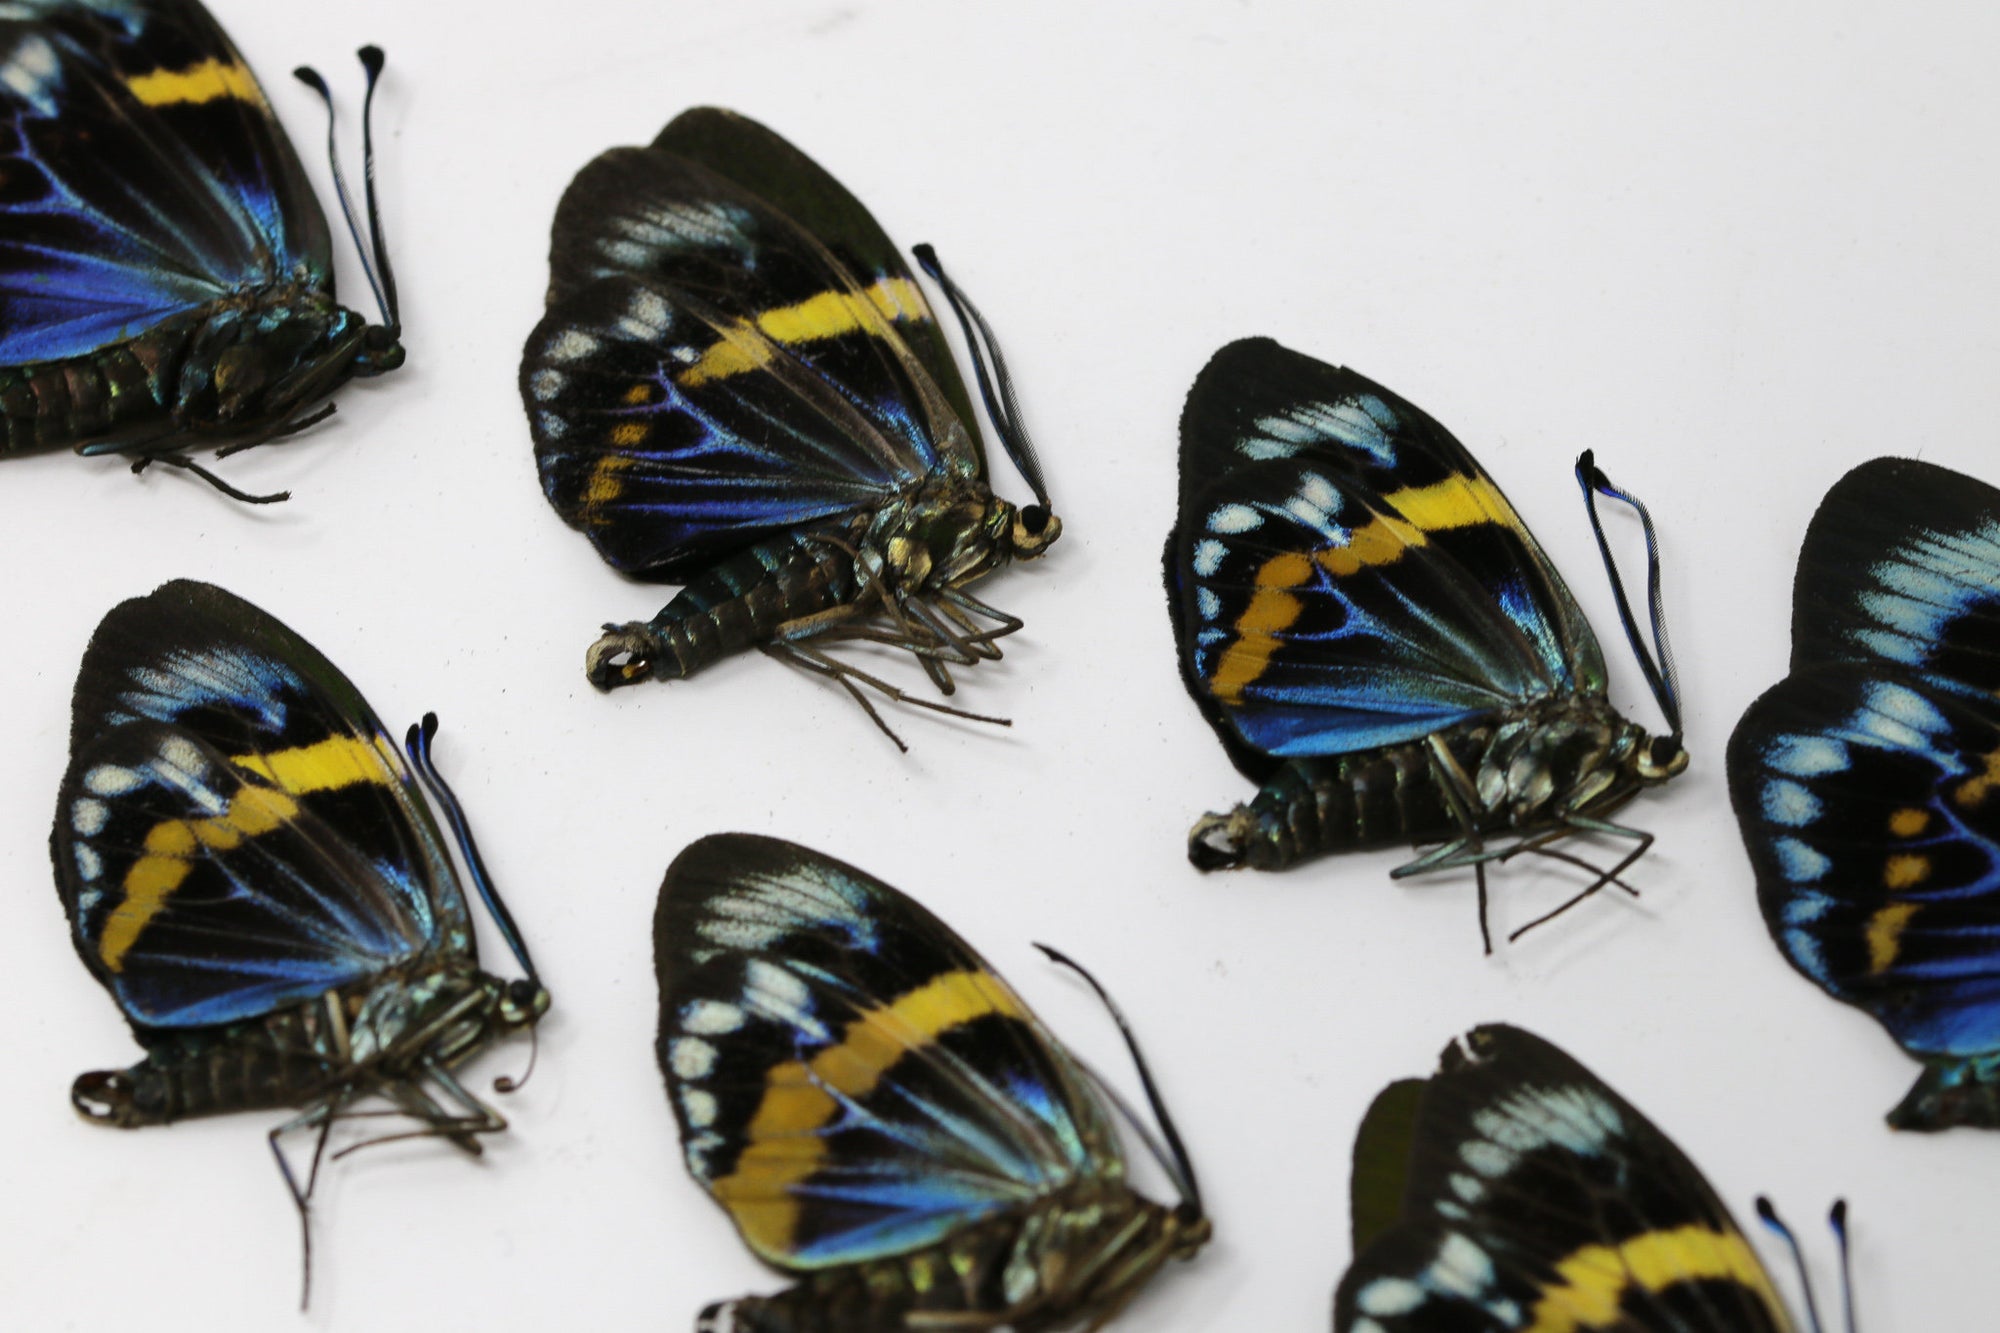 10 x Eterusia repleta | Thai Blue Day-flying Moth | A1 Unmounted Specimens